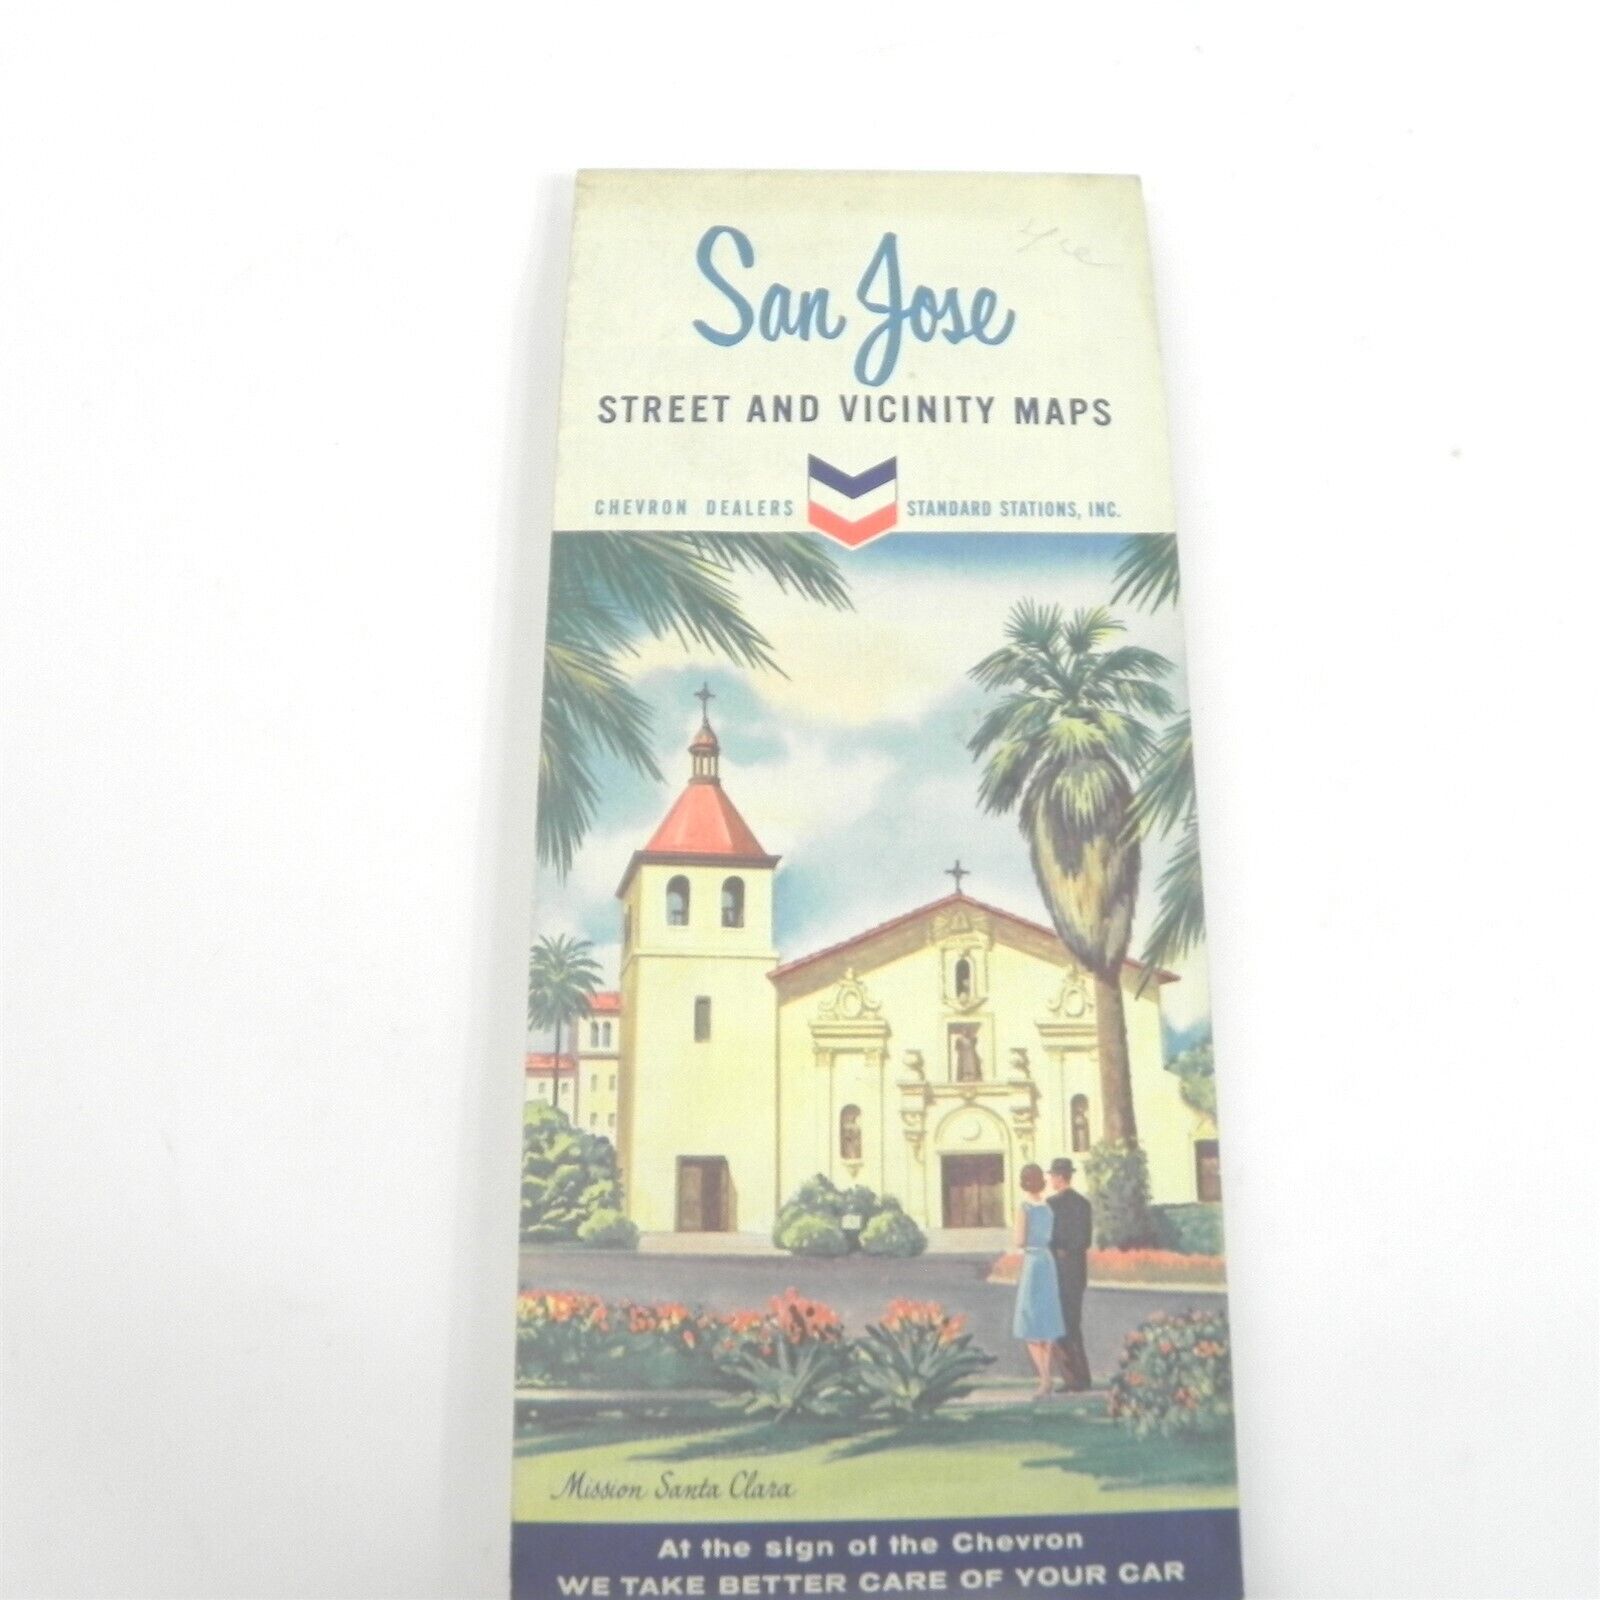 VINTAGE 1963 CHEVRON OIL COMPANY MAP OF SAN JOSE CALIFORNIA TOURING GUIDE GAS